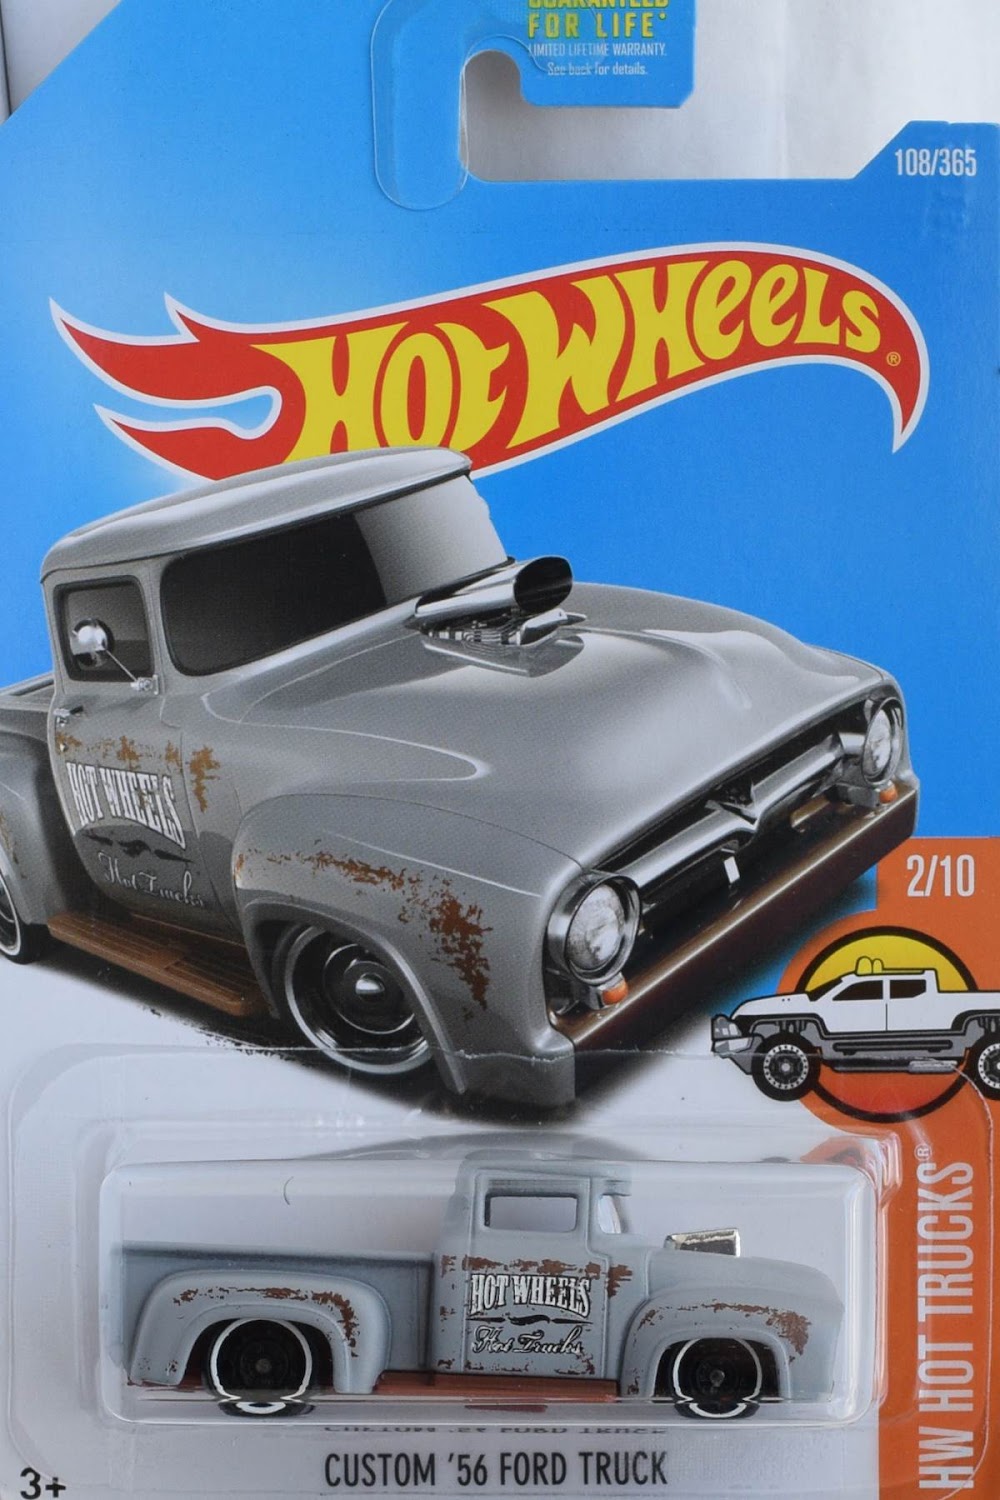 Custom Ford Truck 56 cover